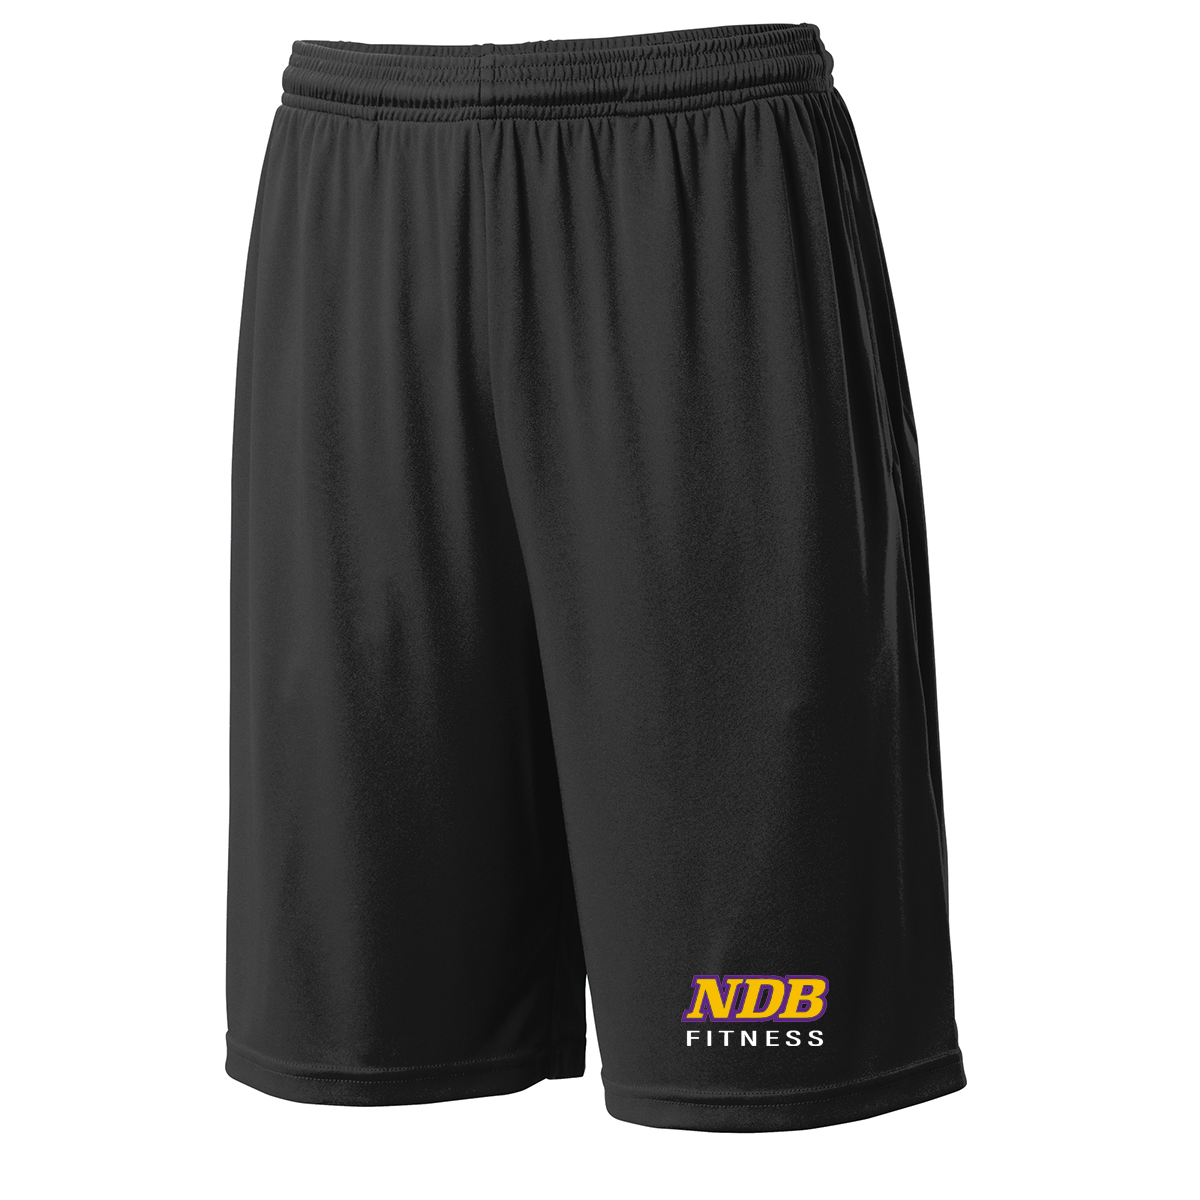 NDB Fitness Shorts